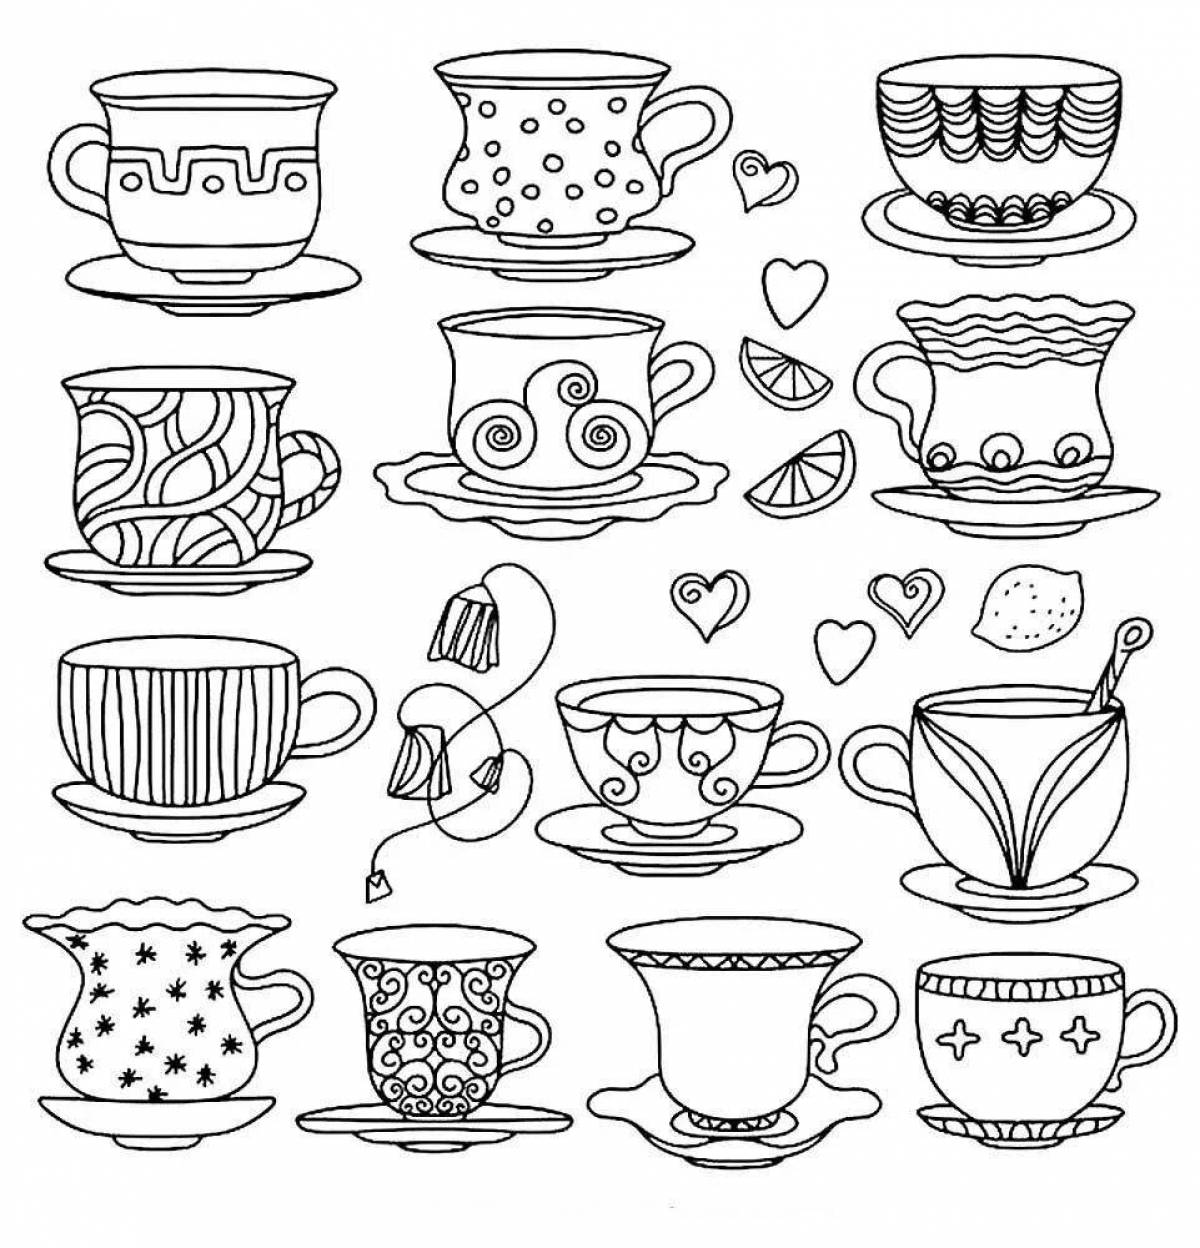 Happy cup of tea coloring page